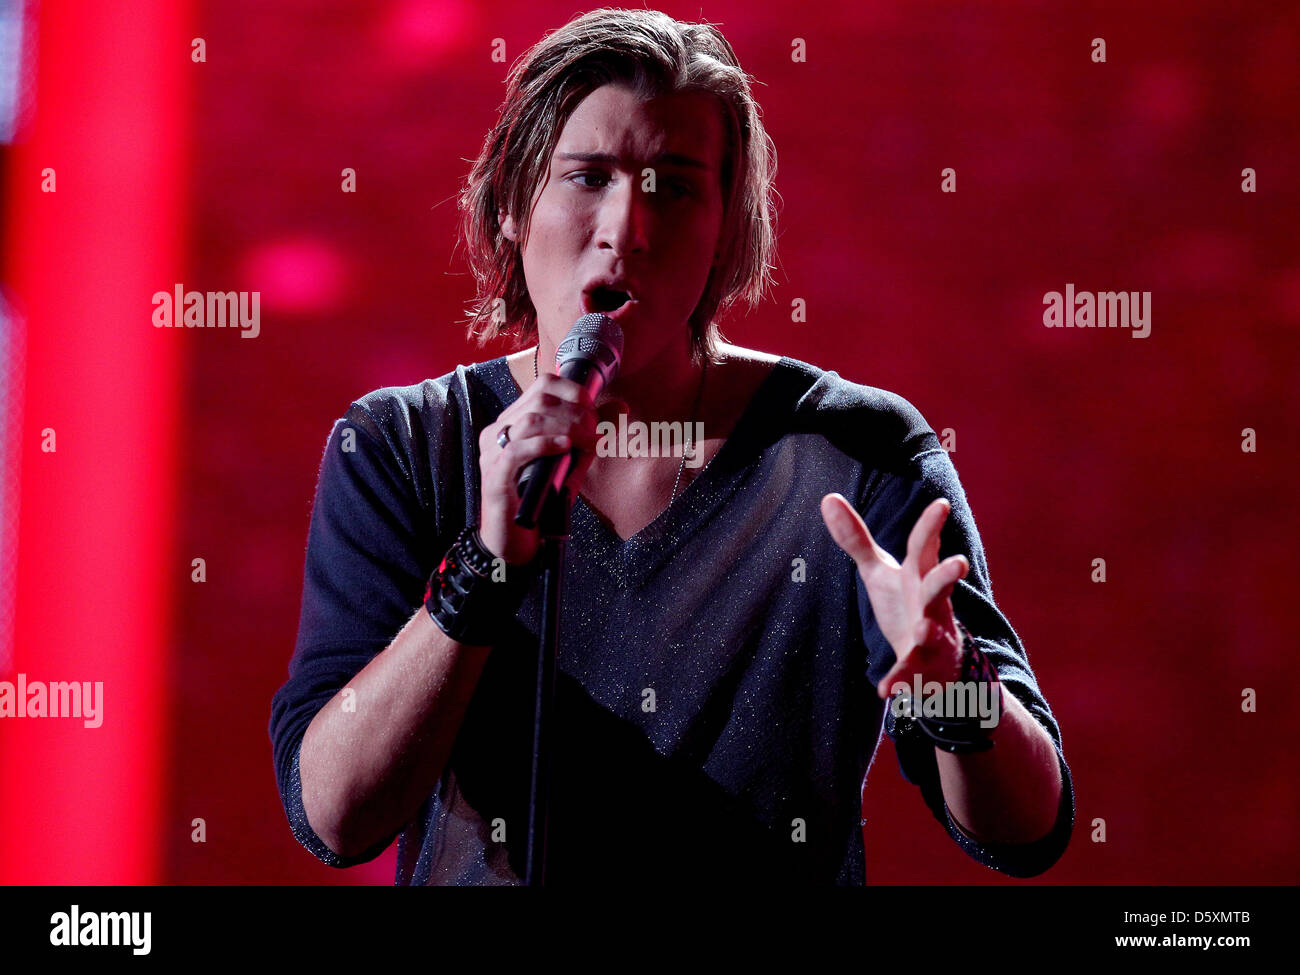 Felix Hahnsch performing live on German TV show 'Deutschland sucht den Superstar' (DSDS). Cologne, Germany - 19.02.2011 Stock Photo